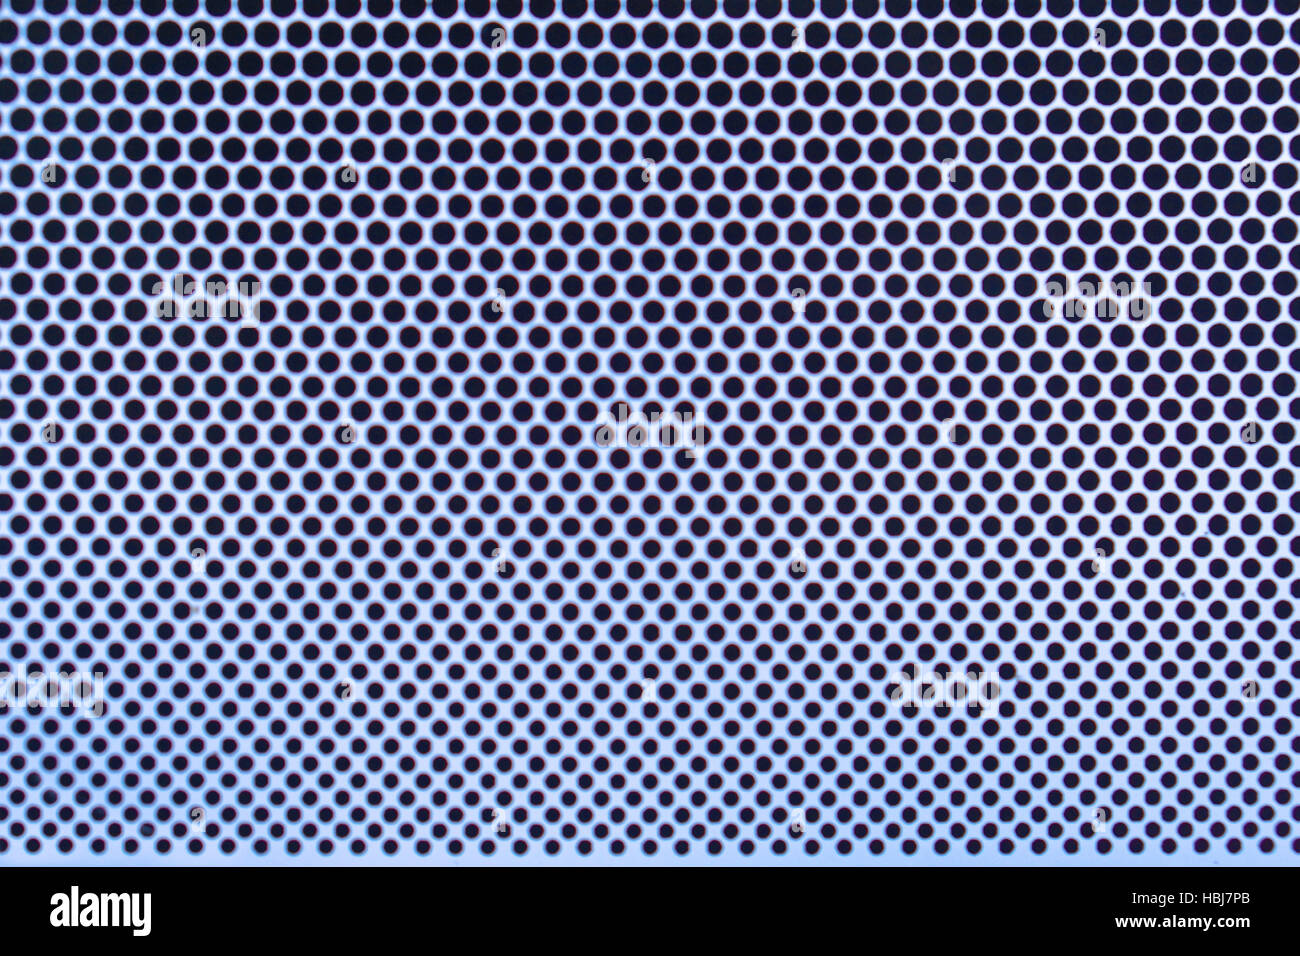 Dots grid illusion Stock Photo